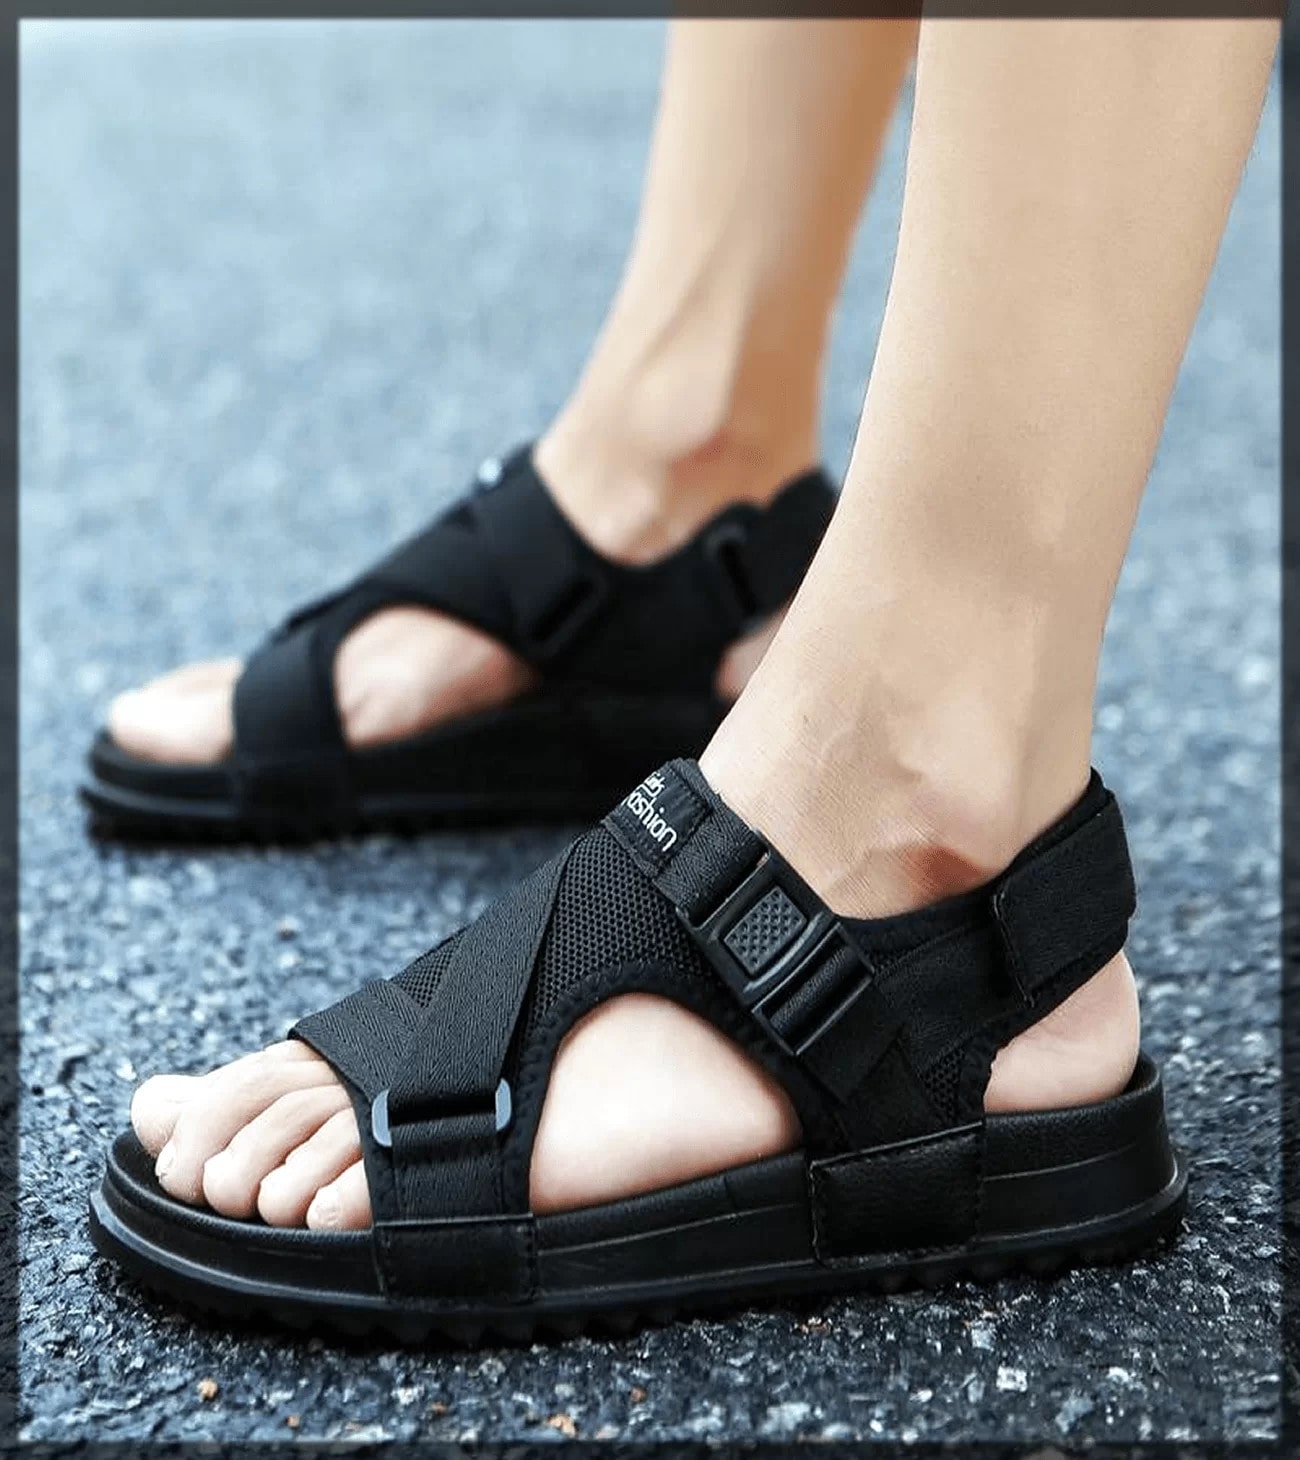 classy black summer shoes for men